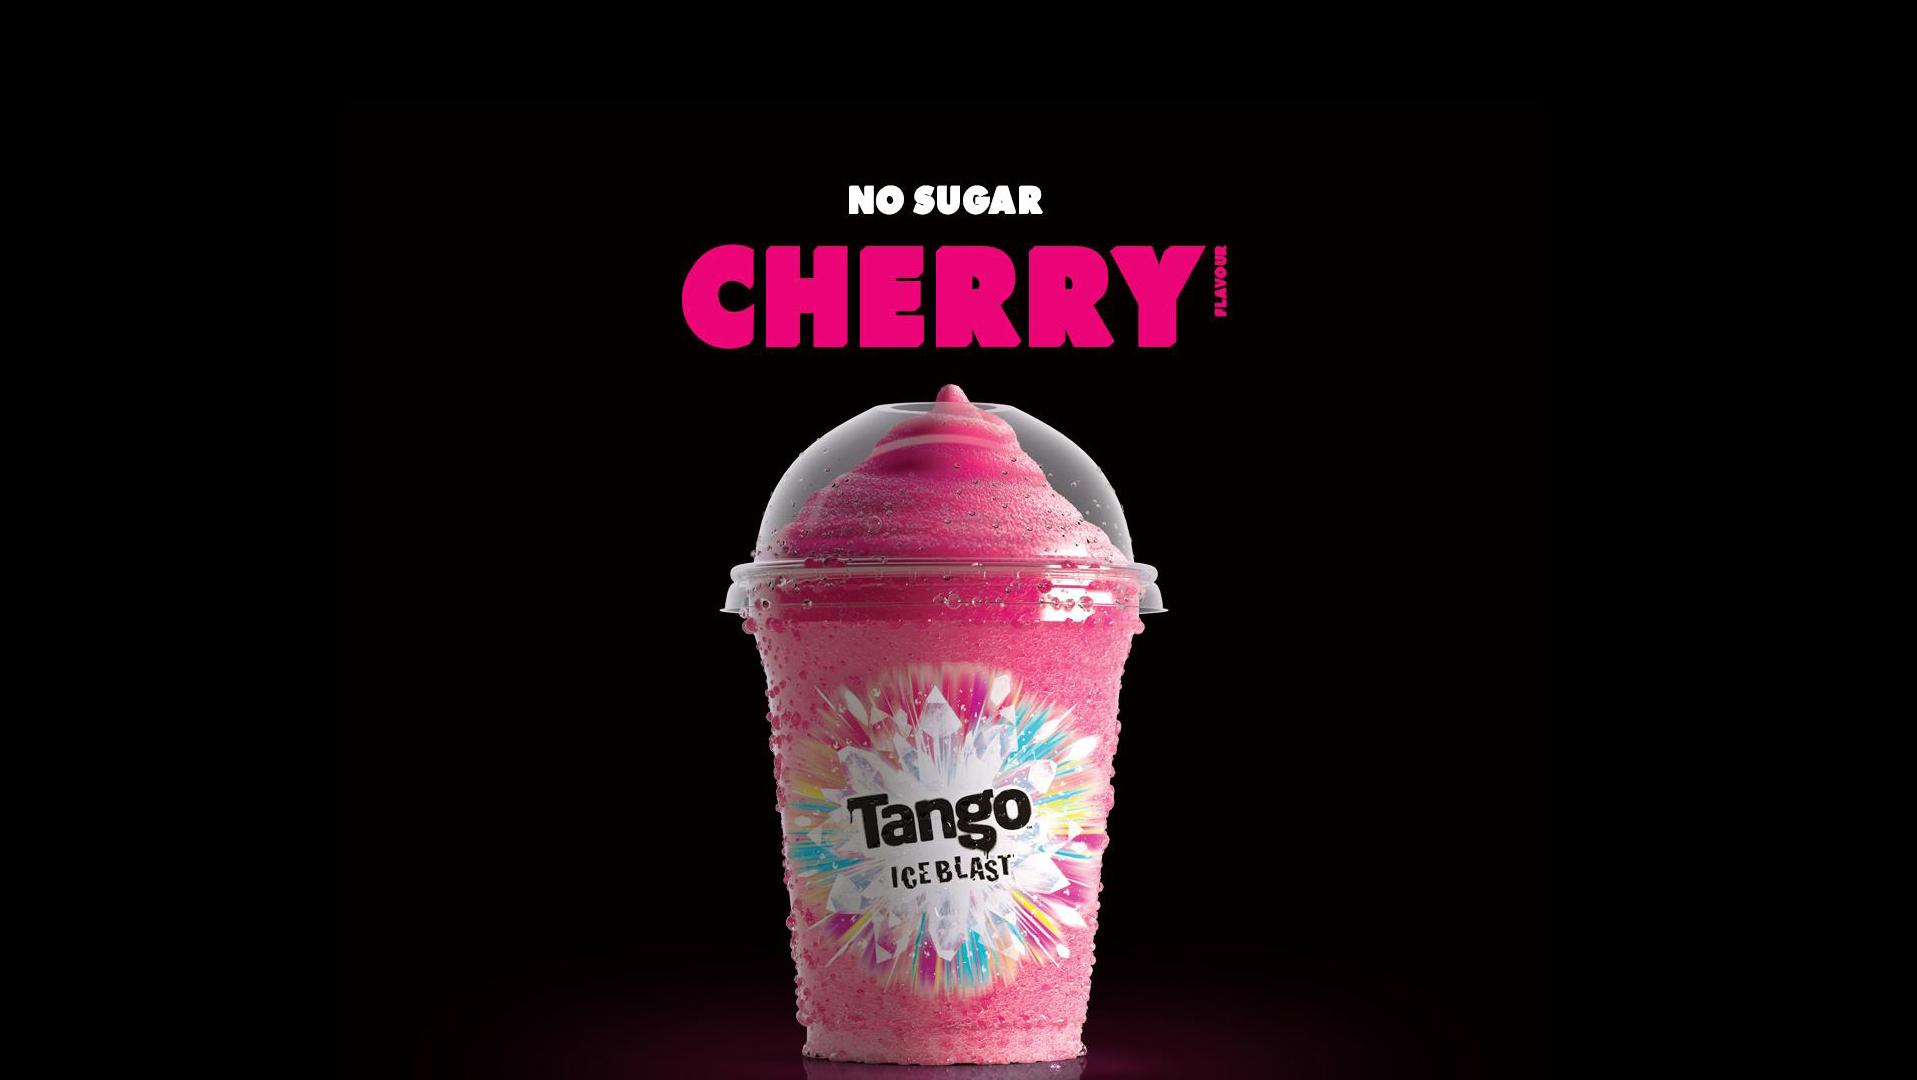 21oz Cherry Tango Ice Blast - Burger Collection in Plashet E6